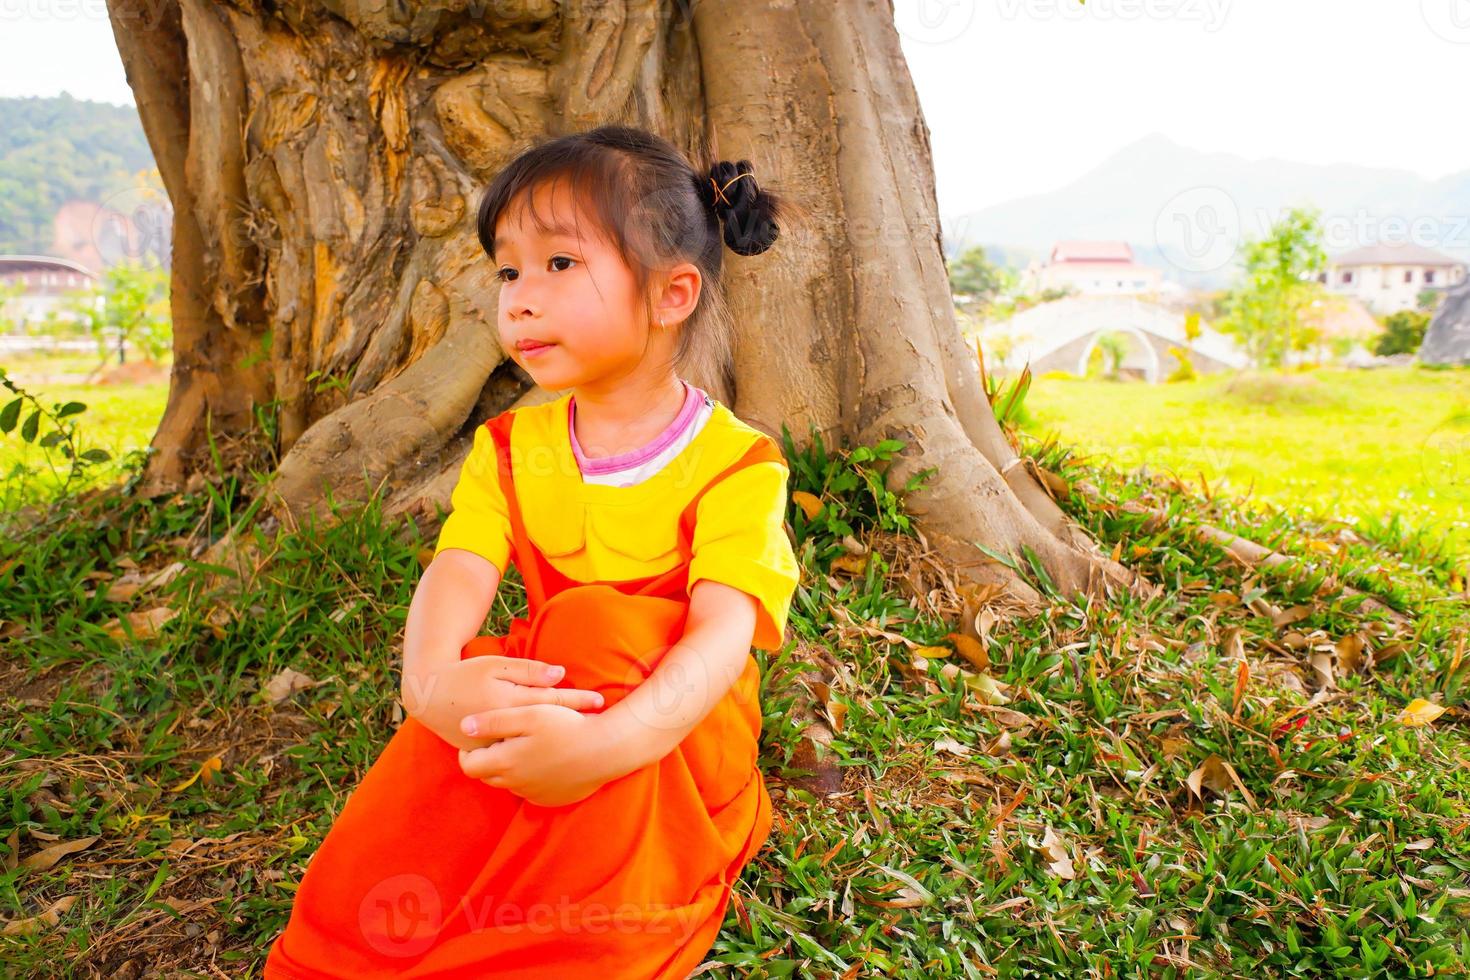 linda menina veste roupa amarelo-laranja roupa gokowa, mugunghwa em um parque público. meninas e vestido de moda adolescente. foto